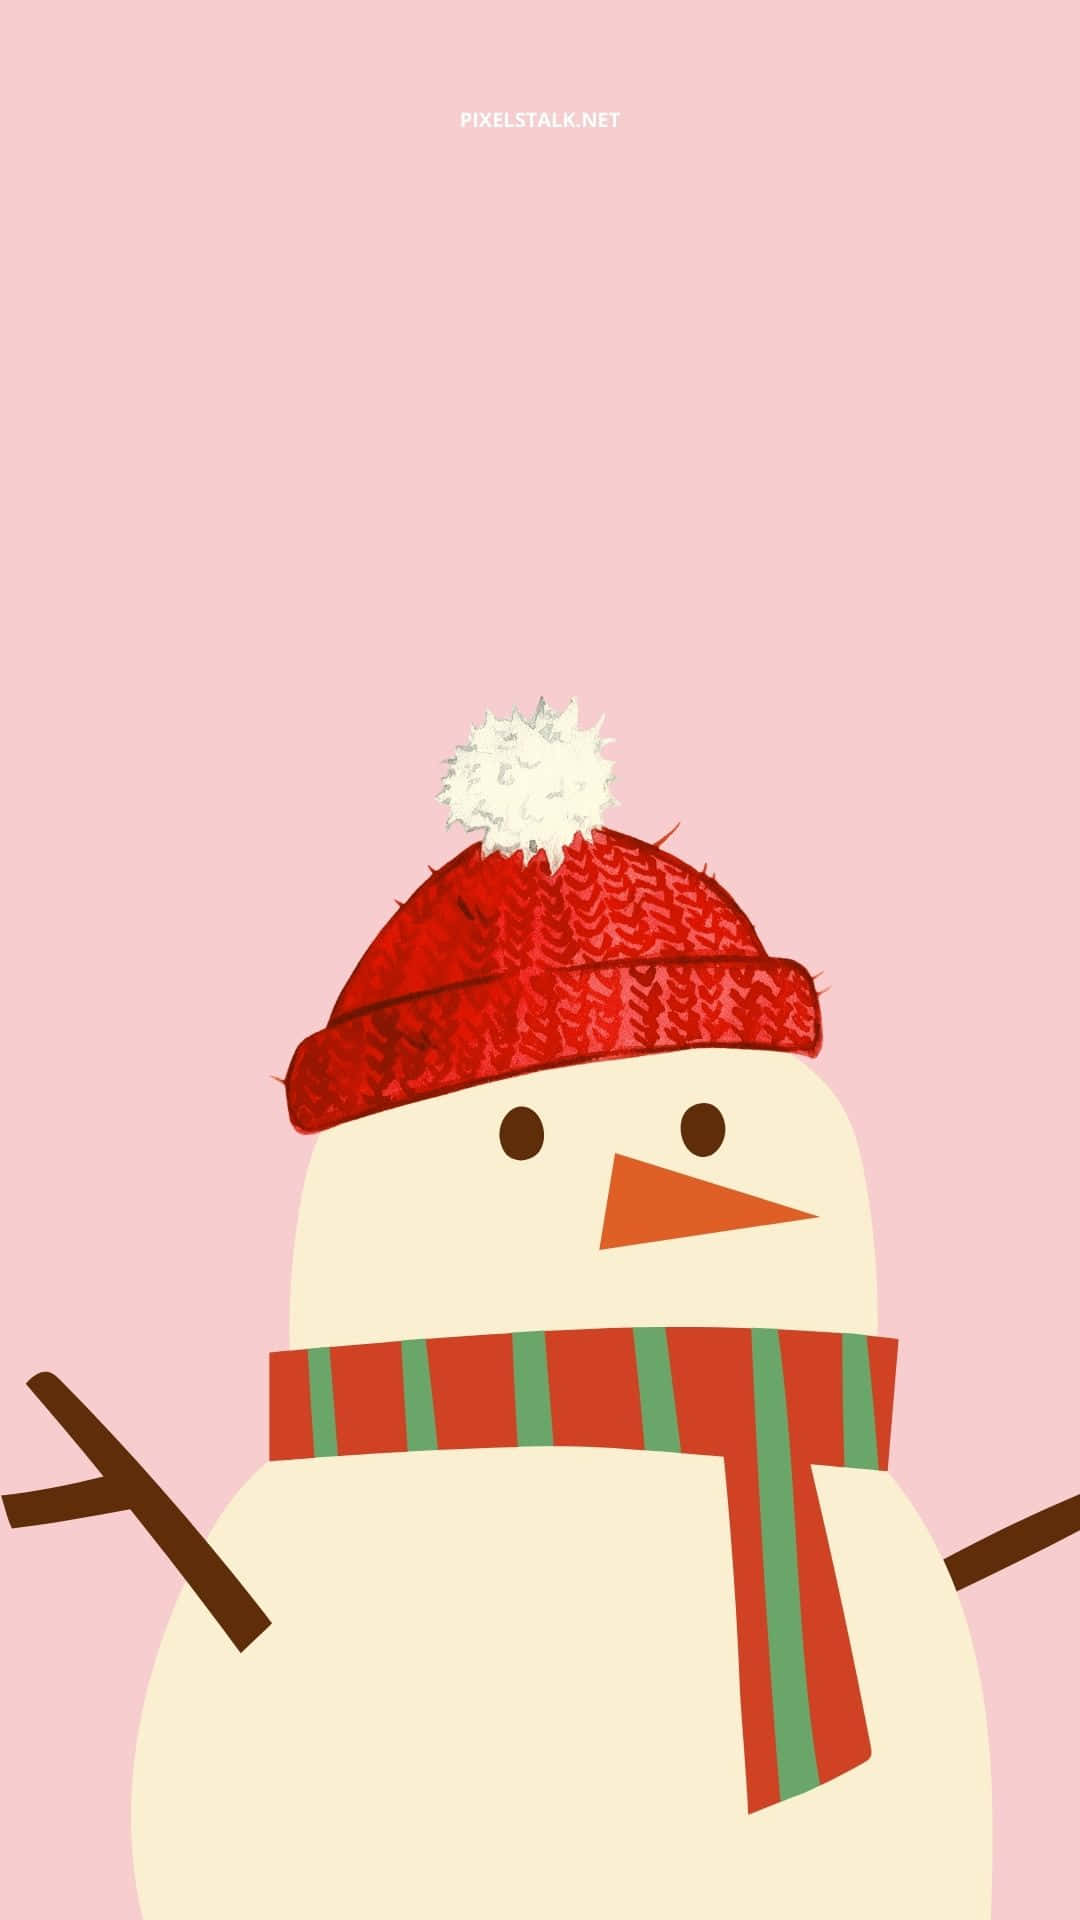 Cute Winter Snowman Wearing Red Hat Phone